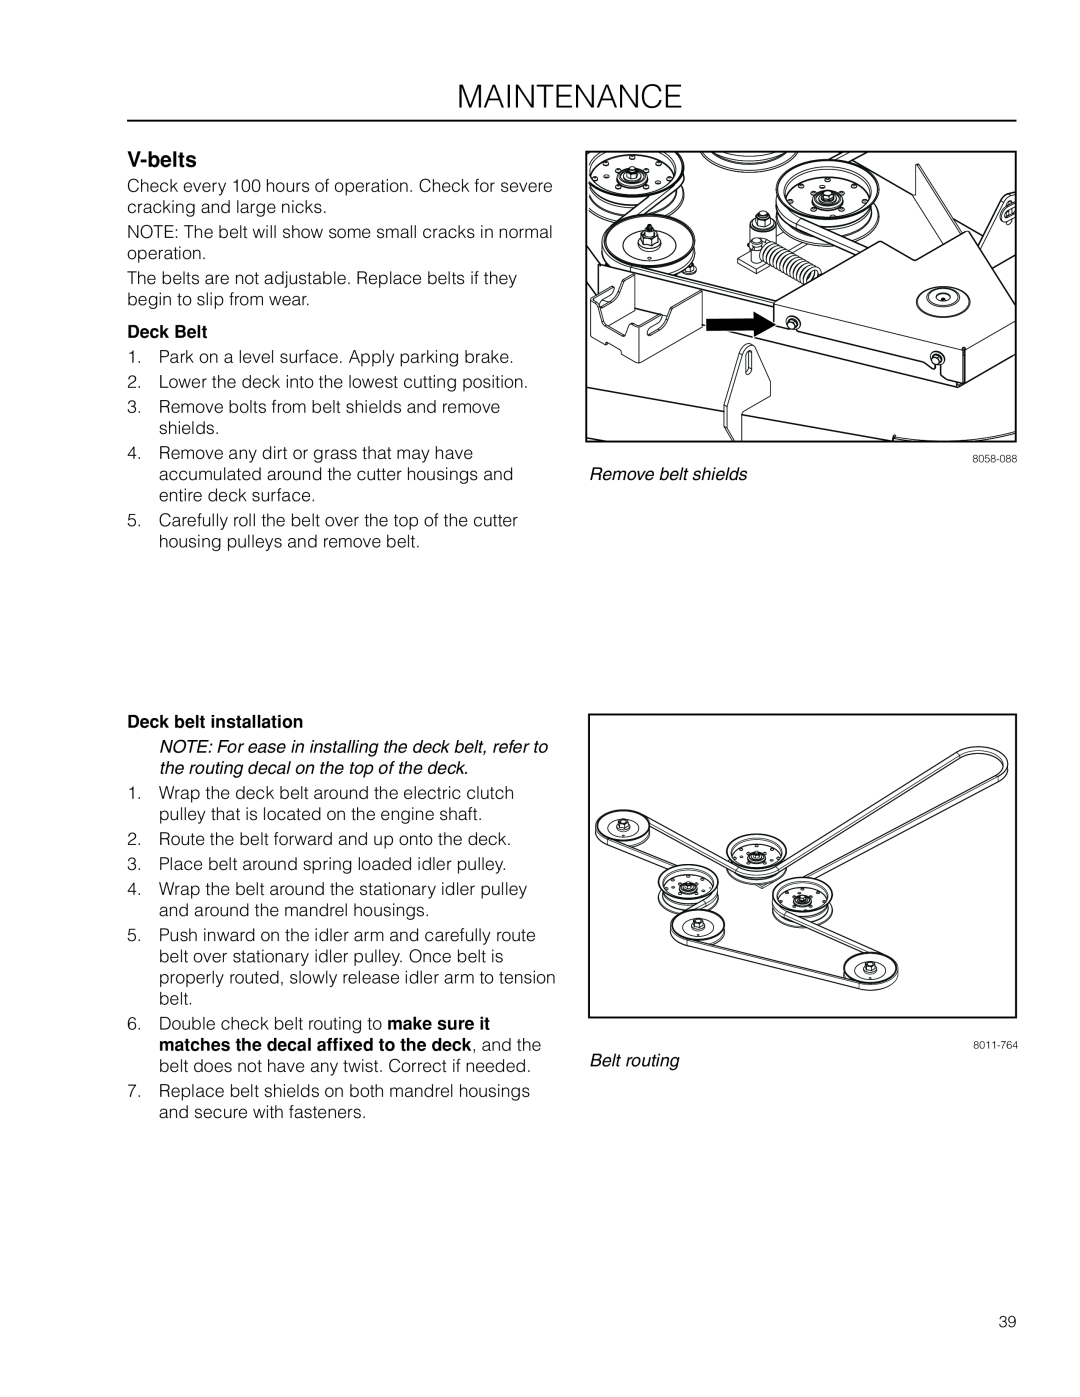 Husqvarna RZ4621 CA manual V-belts, Remove belt shields, Belt routing, Maintenance, Deck Belt, Deck belt installation 